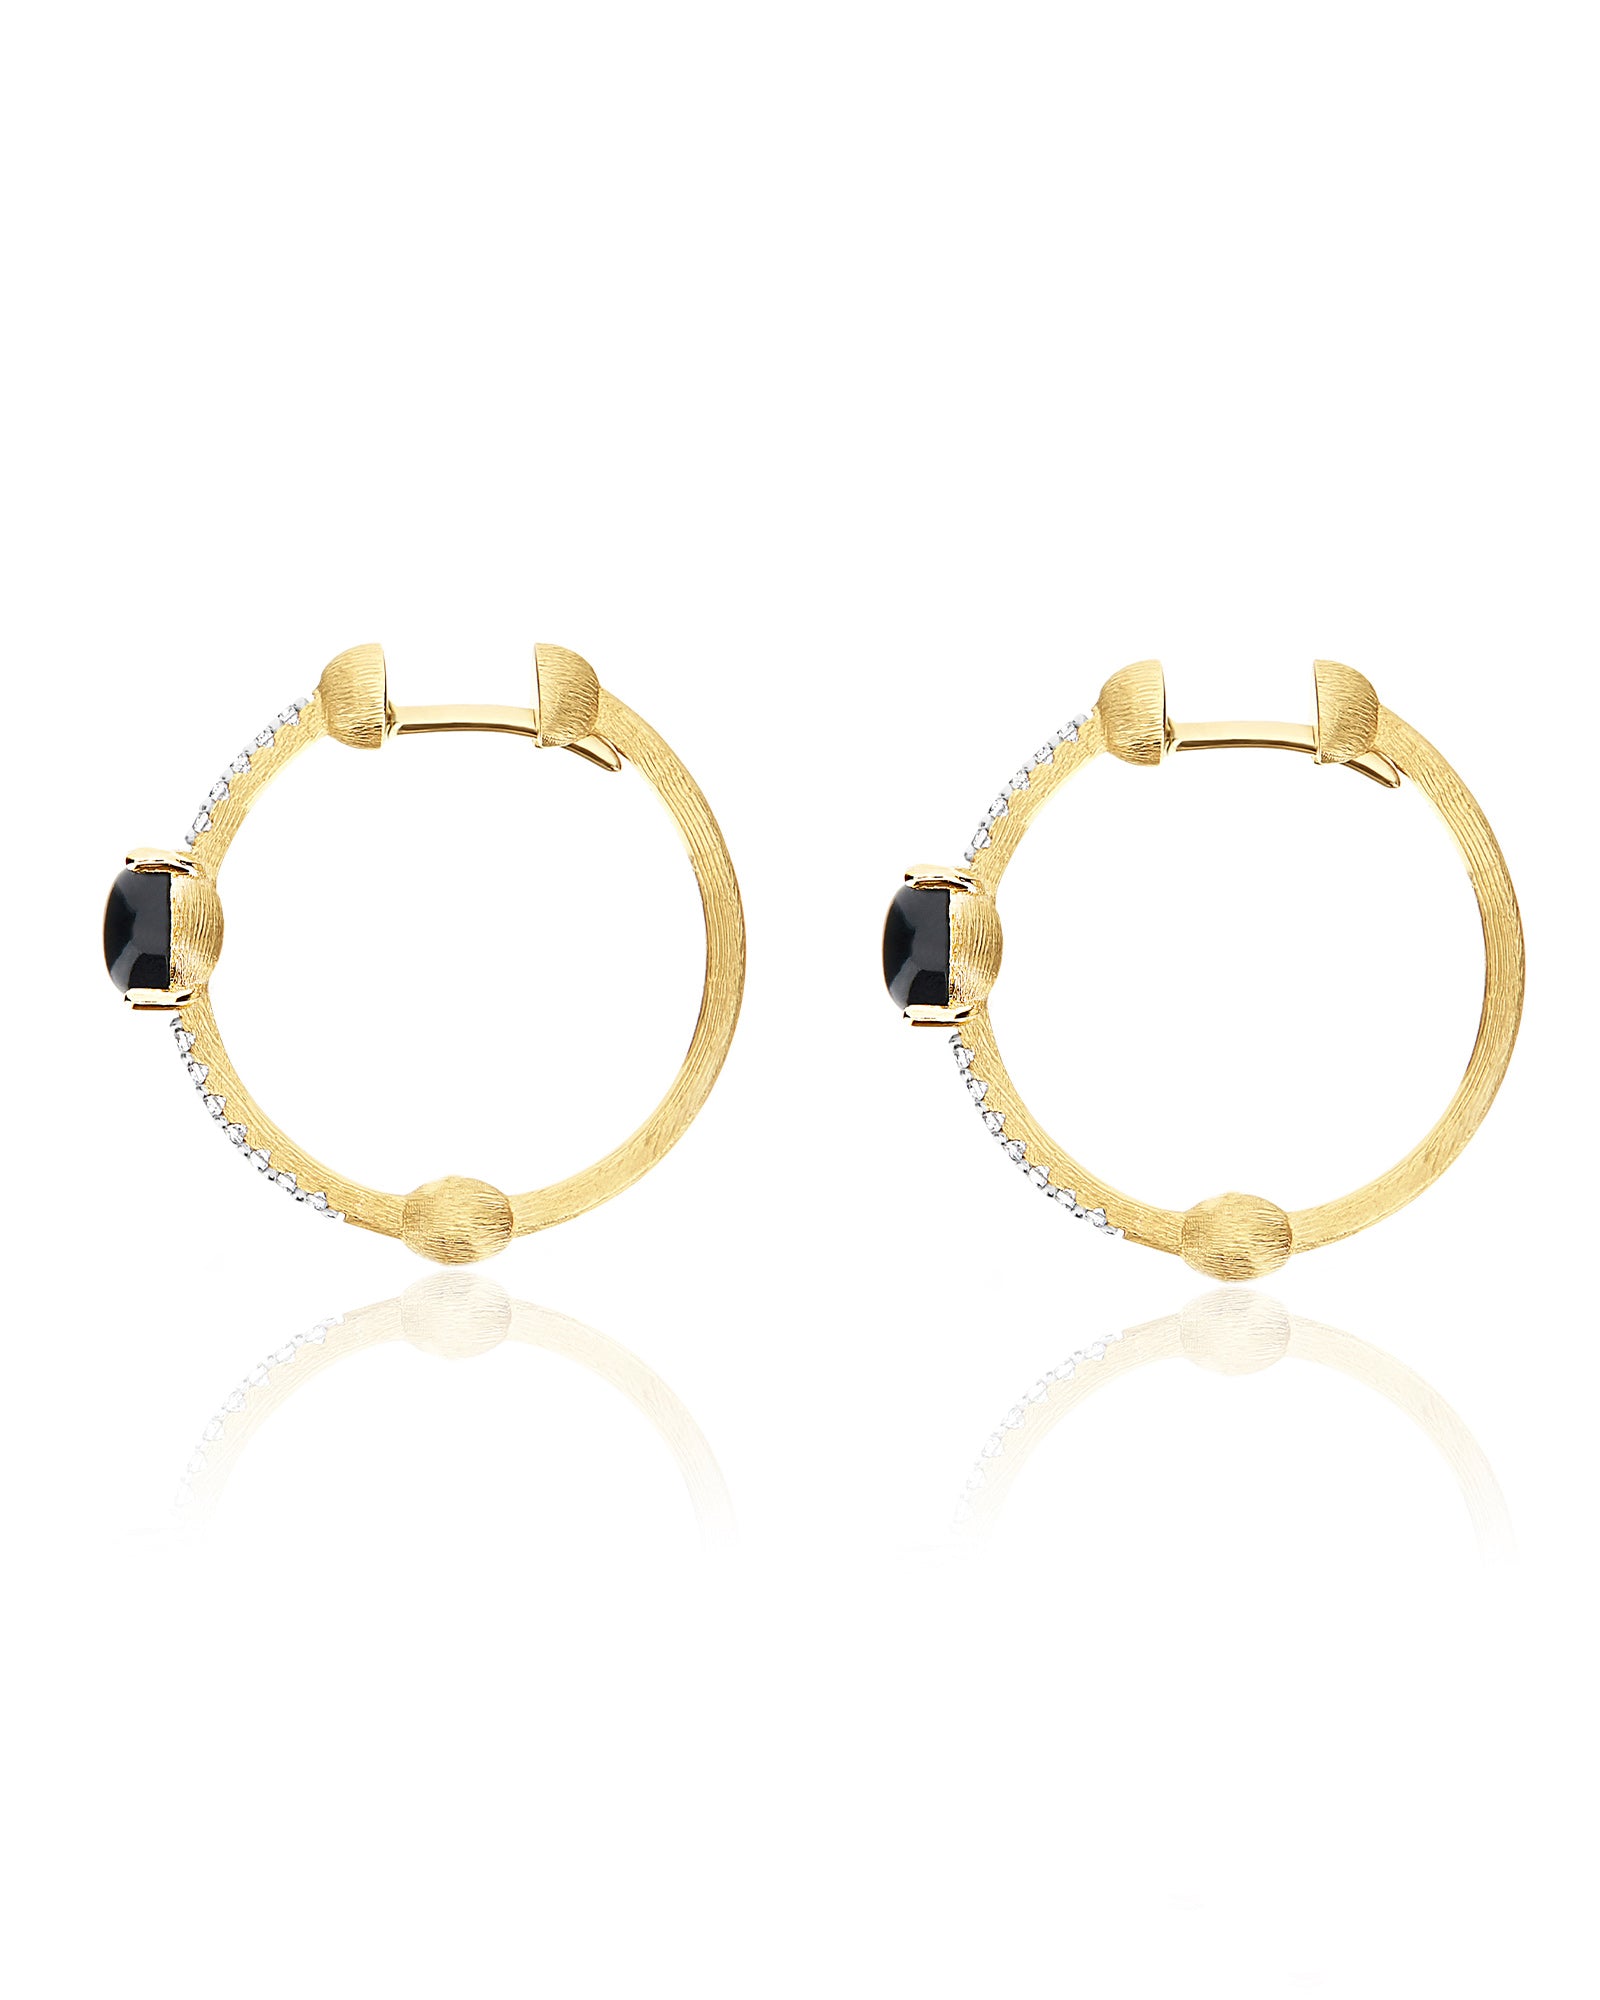 "Mystery Black" Gold, Black Onyx and diamonds hoop earrings